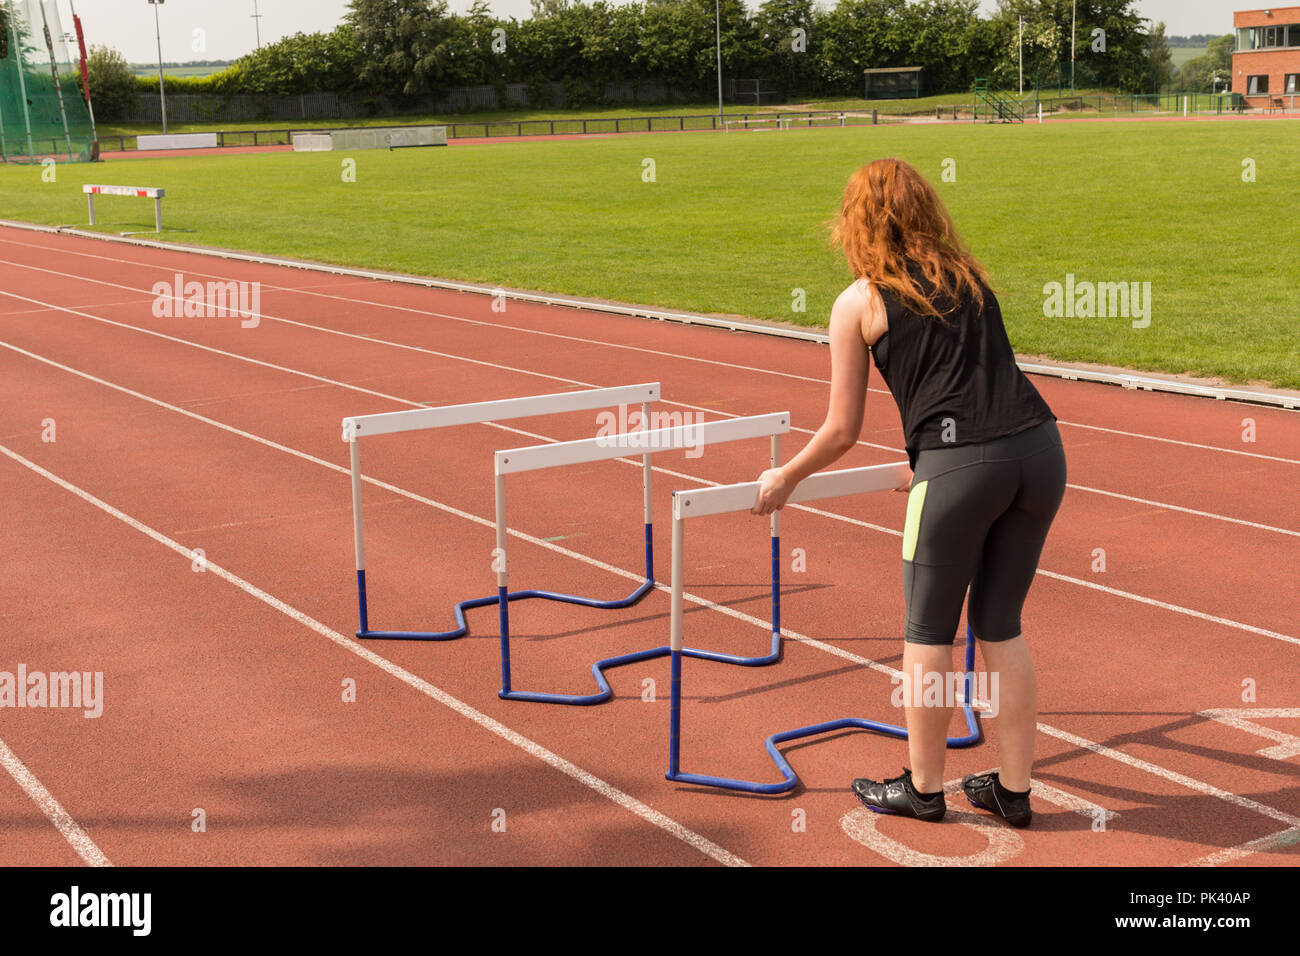 Female athlete arranging hurdles on running track Stock Photo